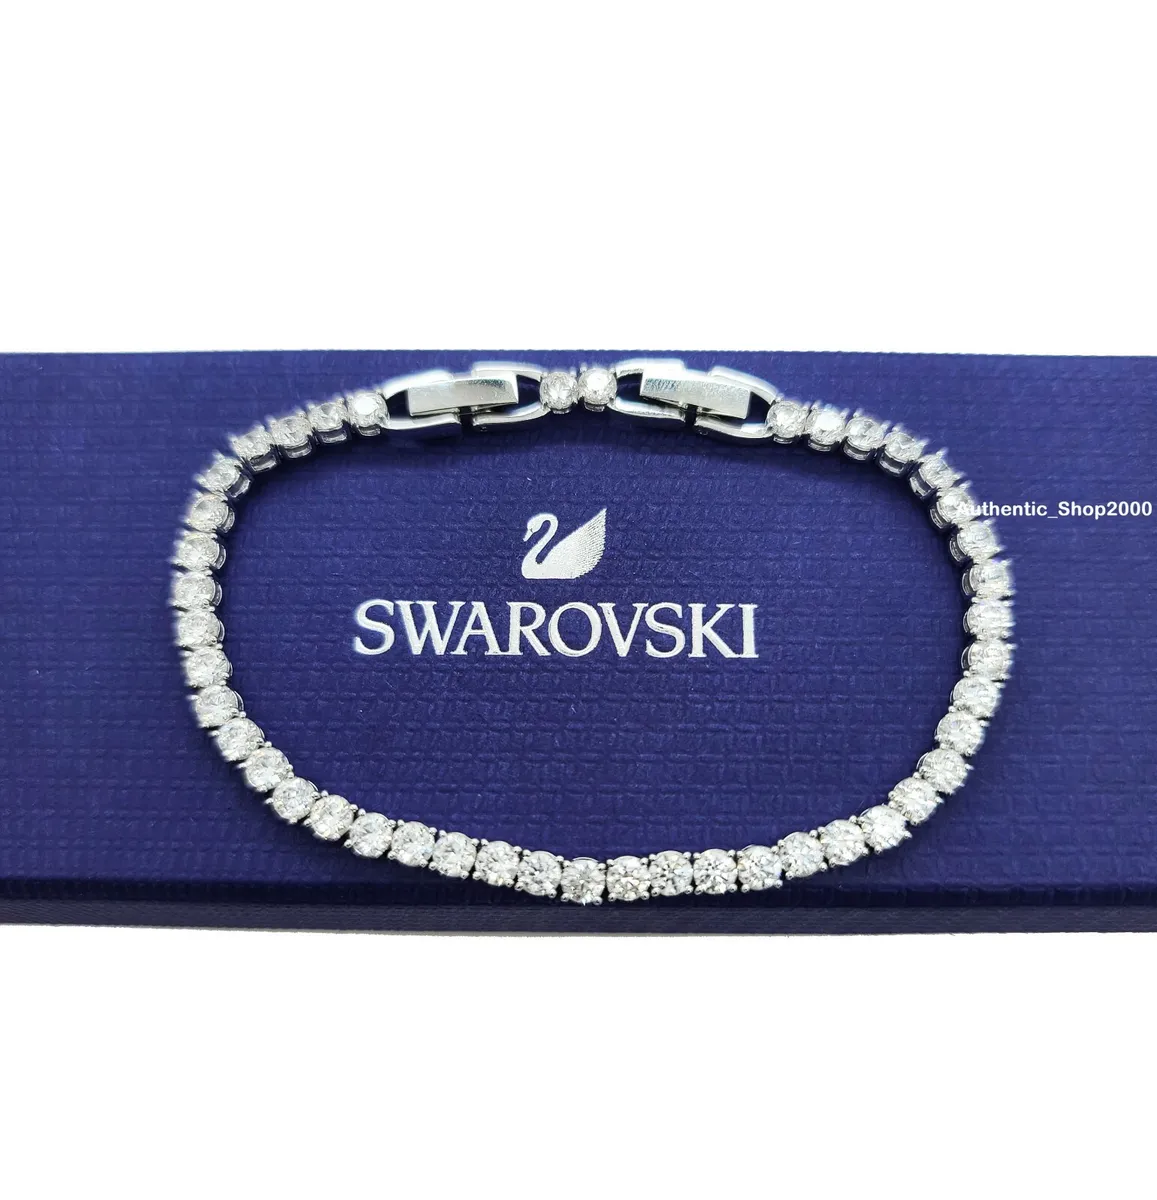 Swarovski Deluxe Tennis Bracelet Round Cut Rose Gold Tone  5464948  eBay